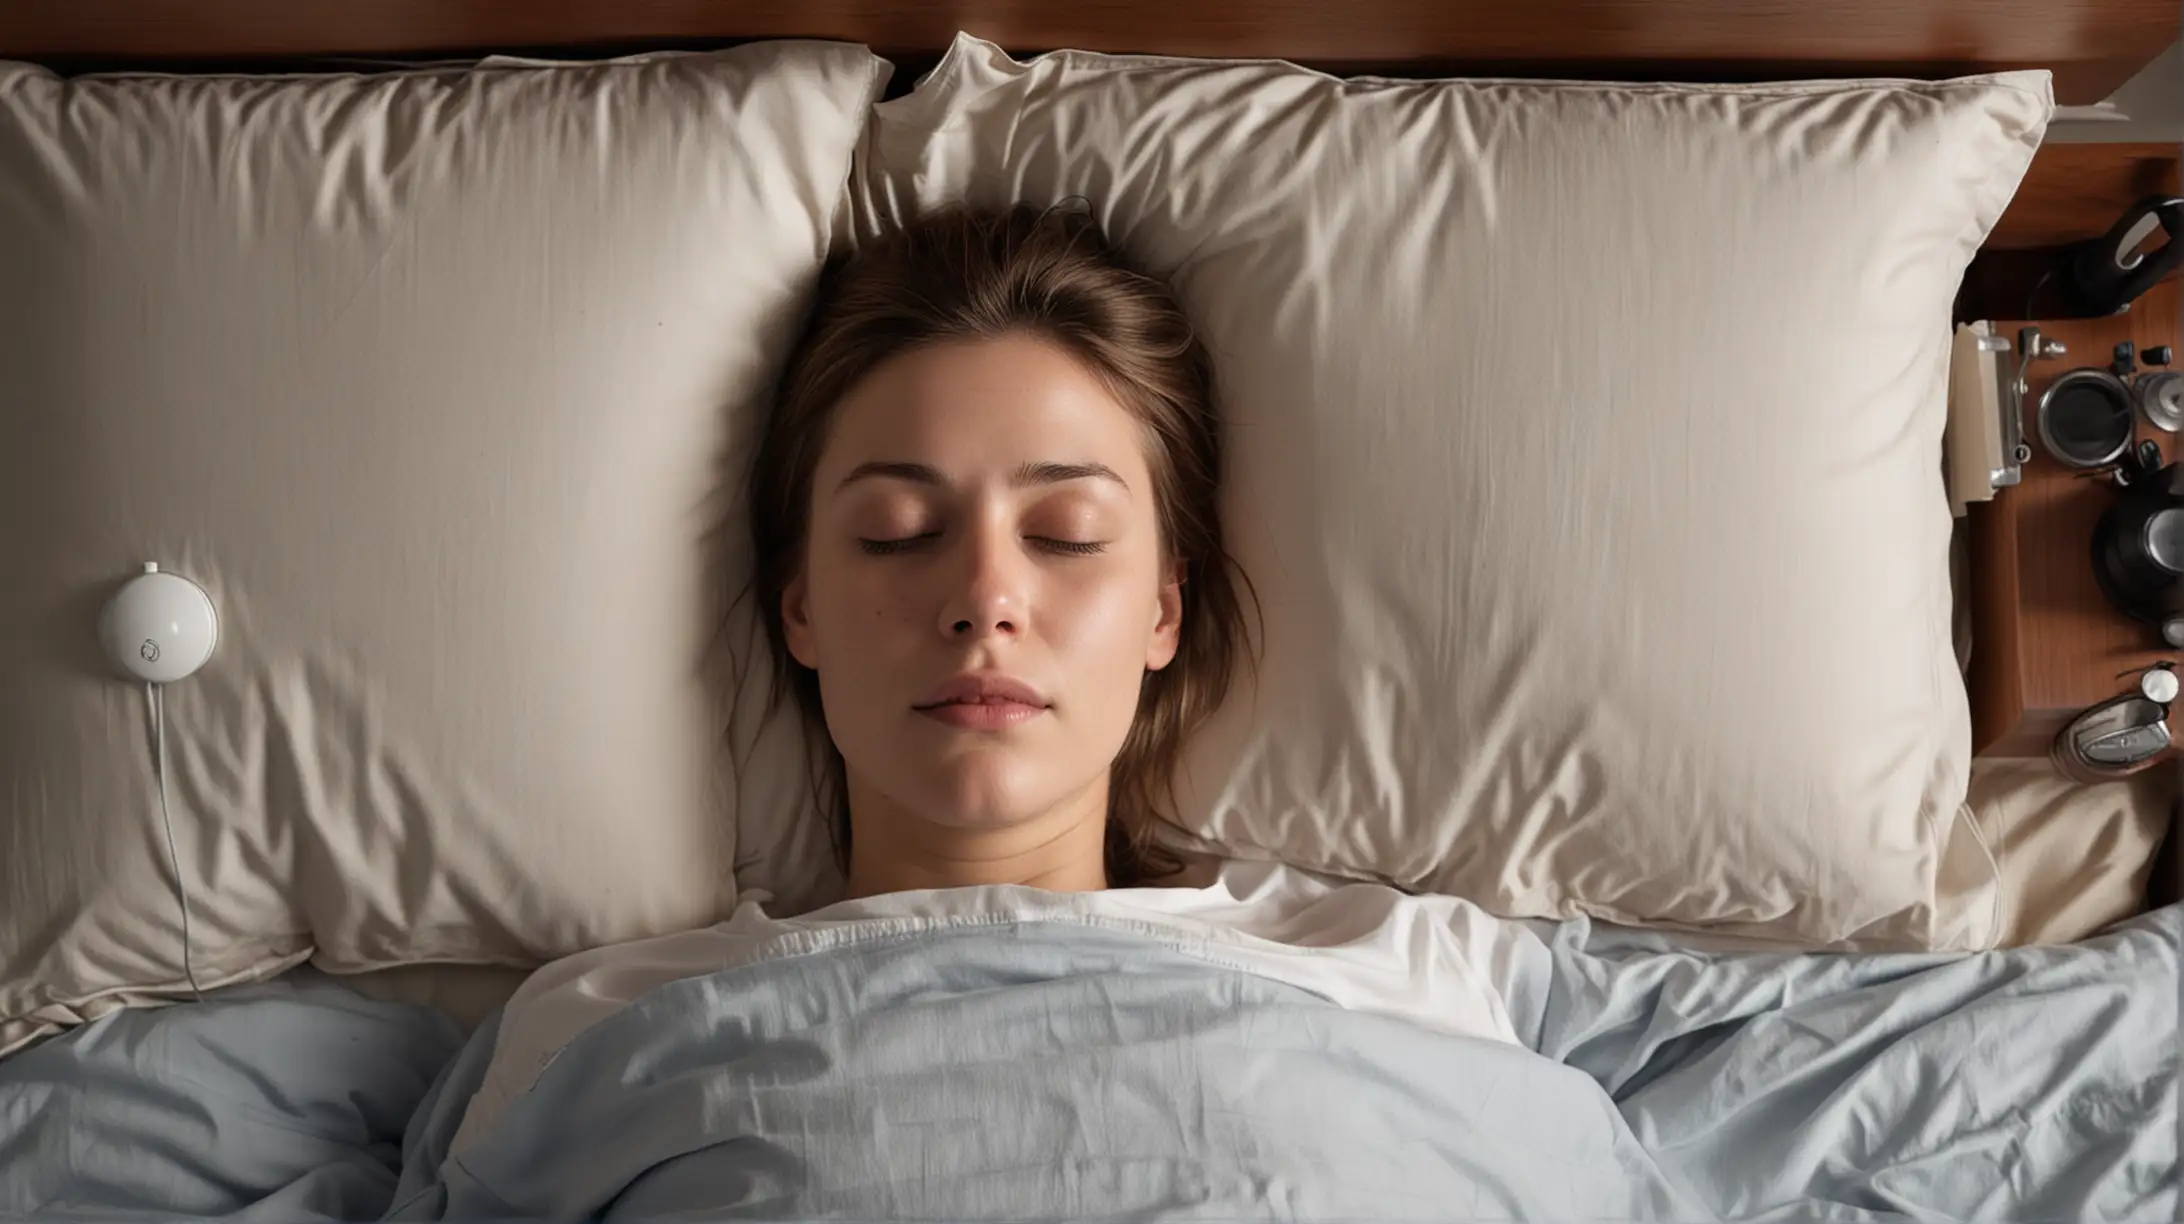 Intense Nighttime Portrait Tense Sleeper in Bed with Bedside Clock